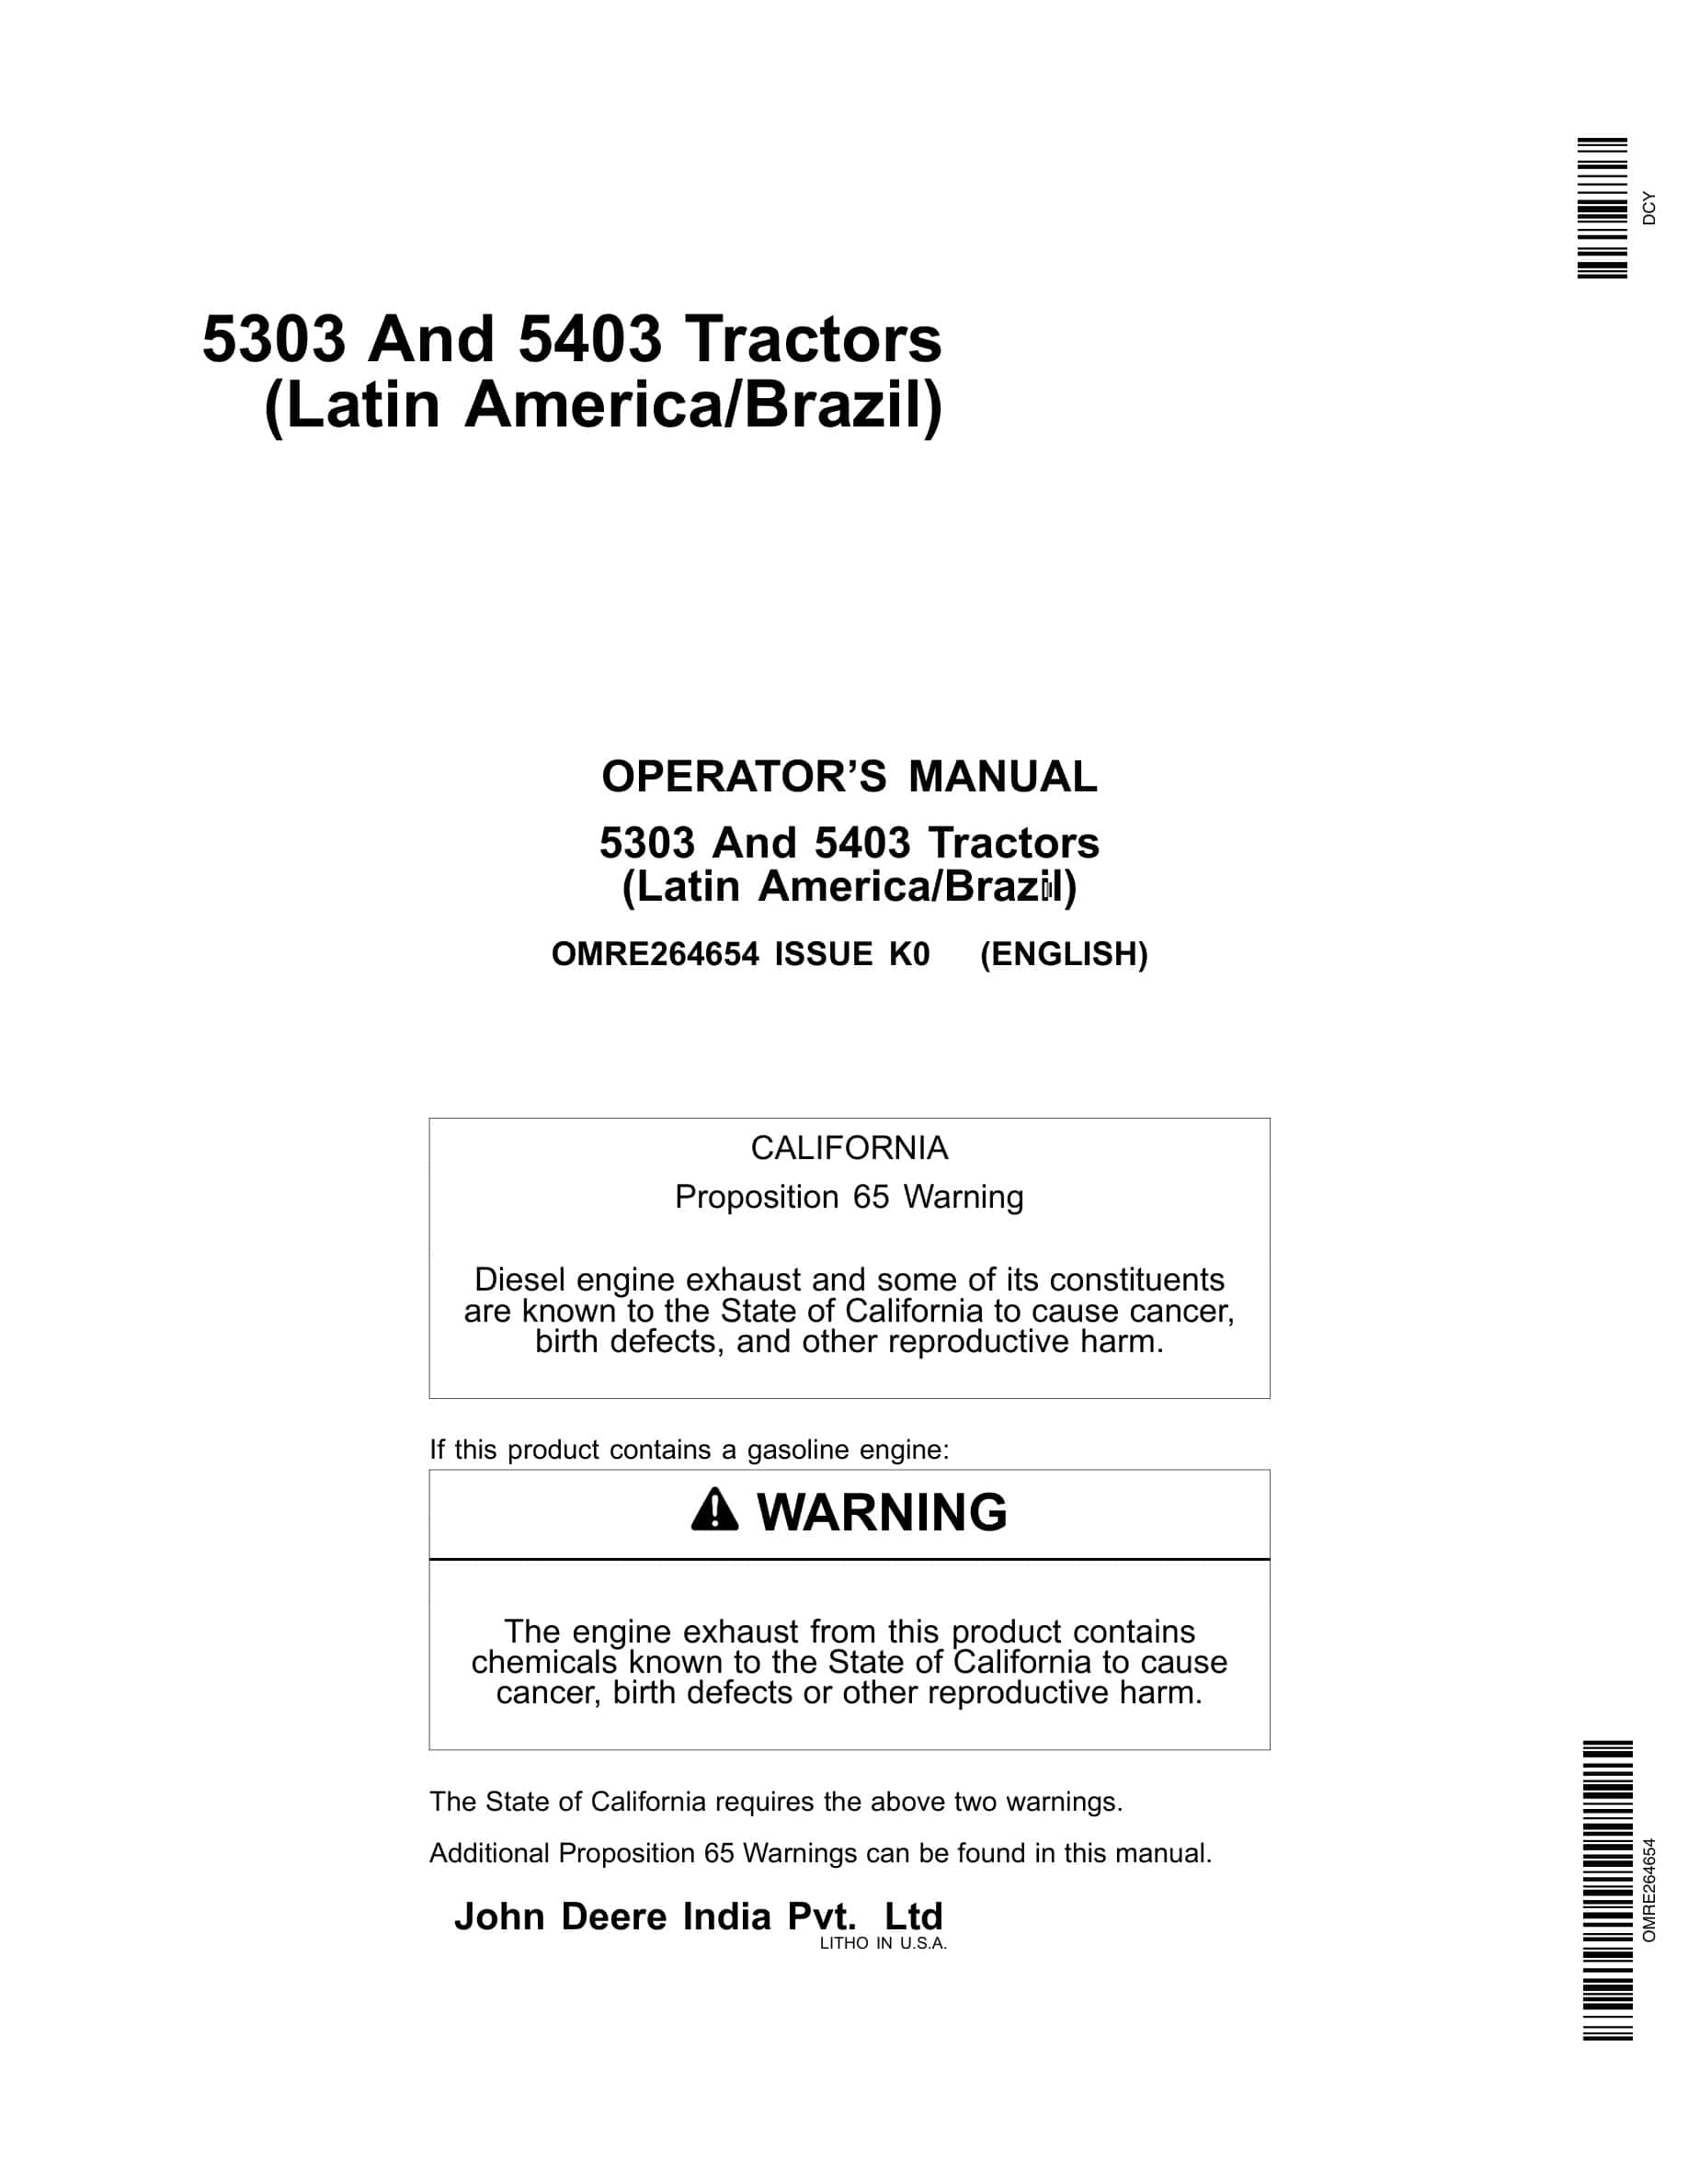 John Deere 5303 And 5403 Tractors Operator Manuals OMRE264654-1